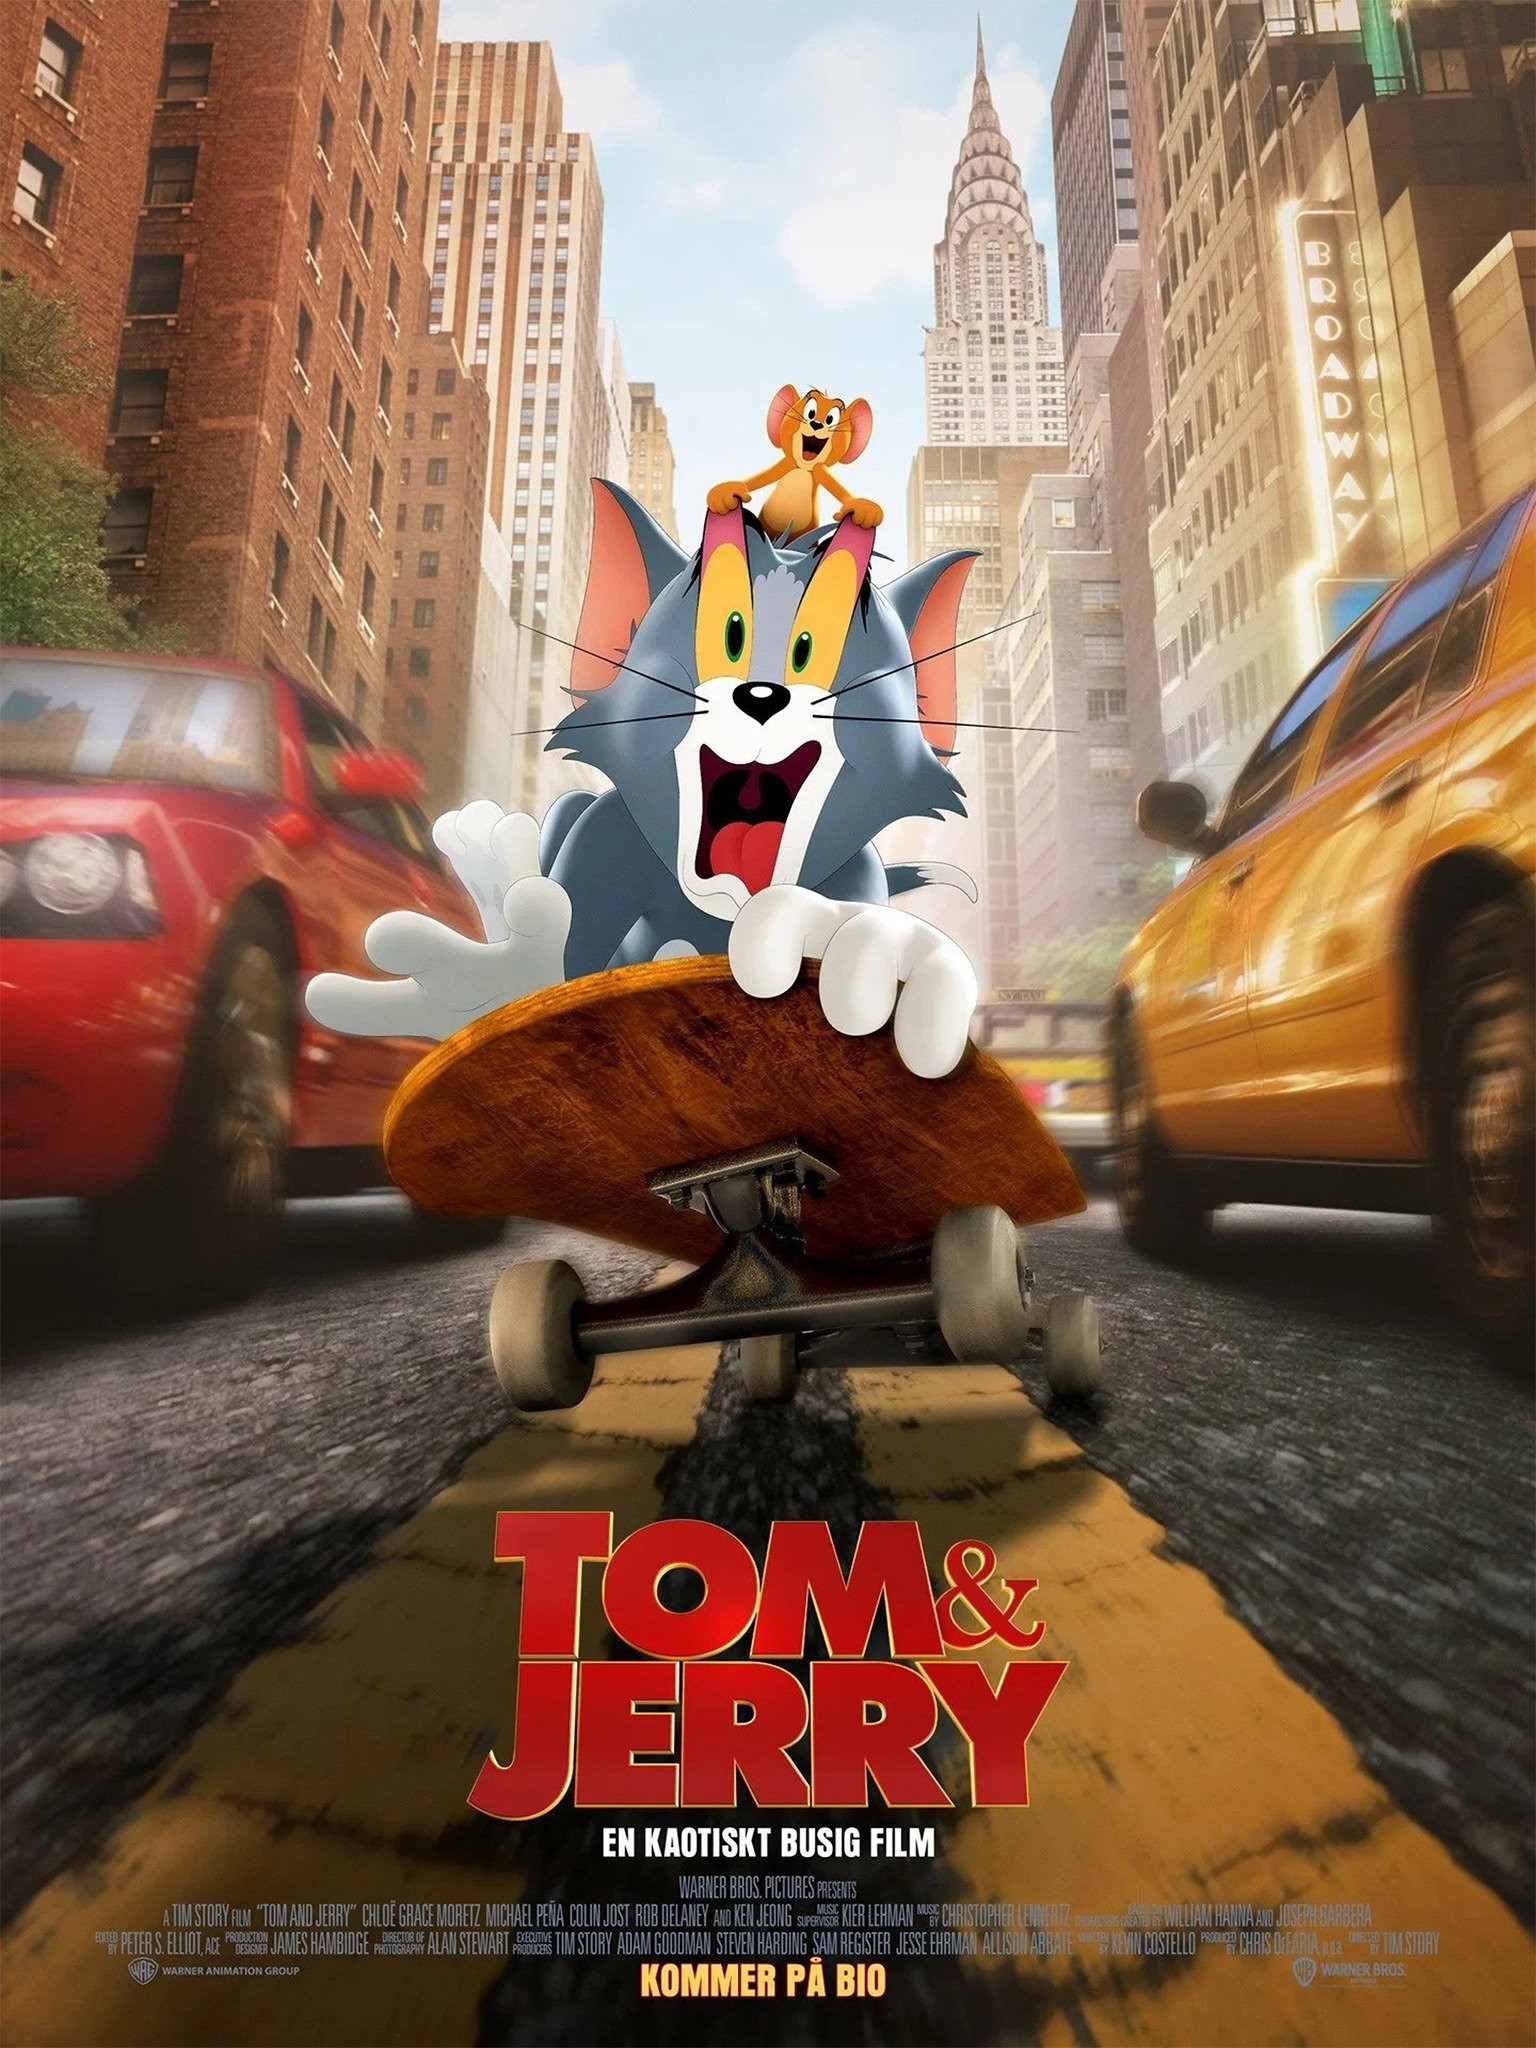 Watch Tom & Jerry: Volume 4 - Season 1